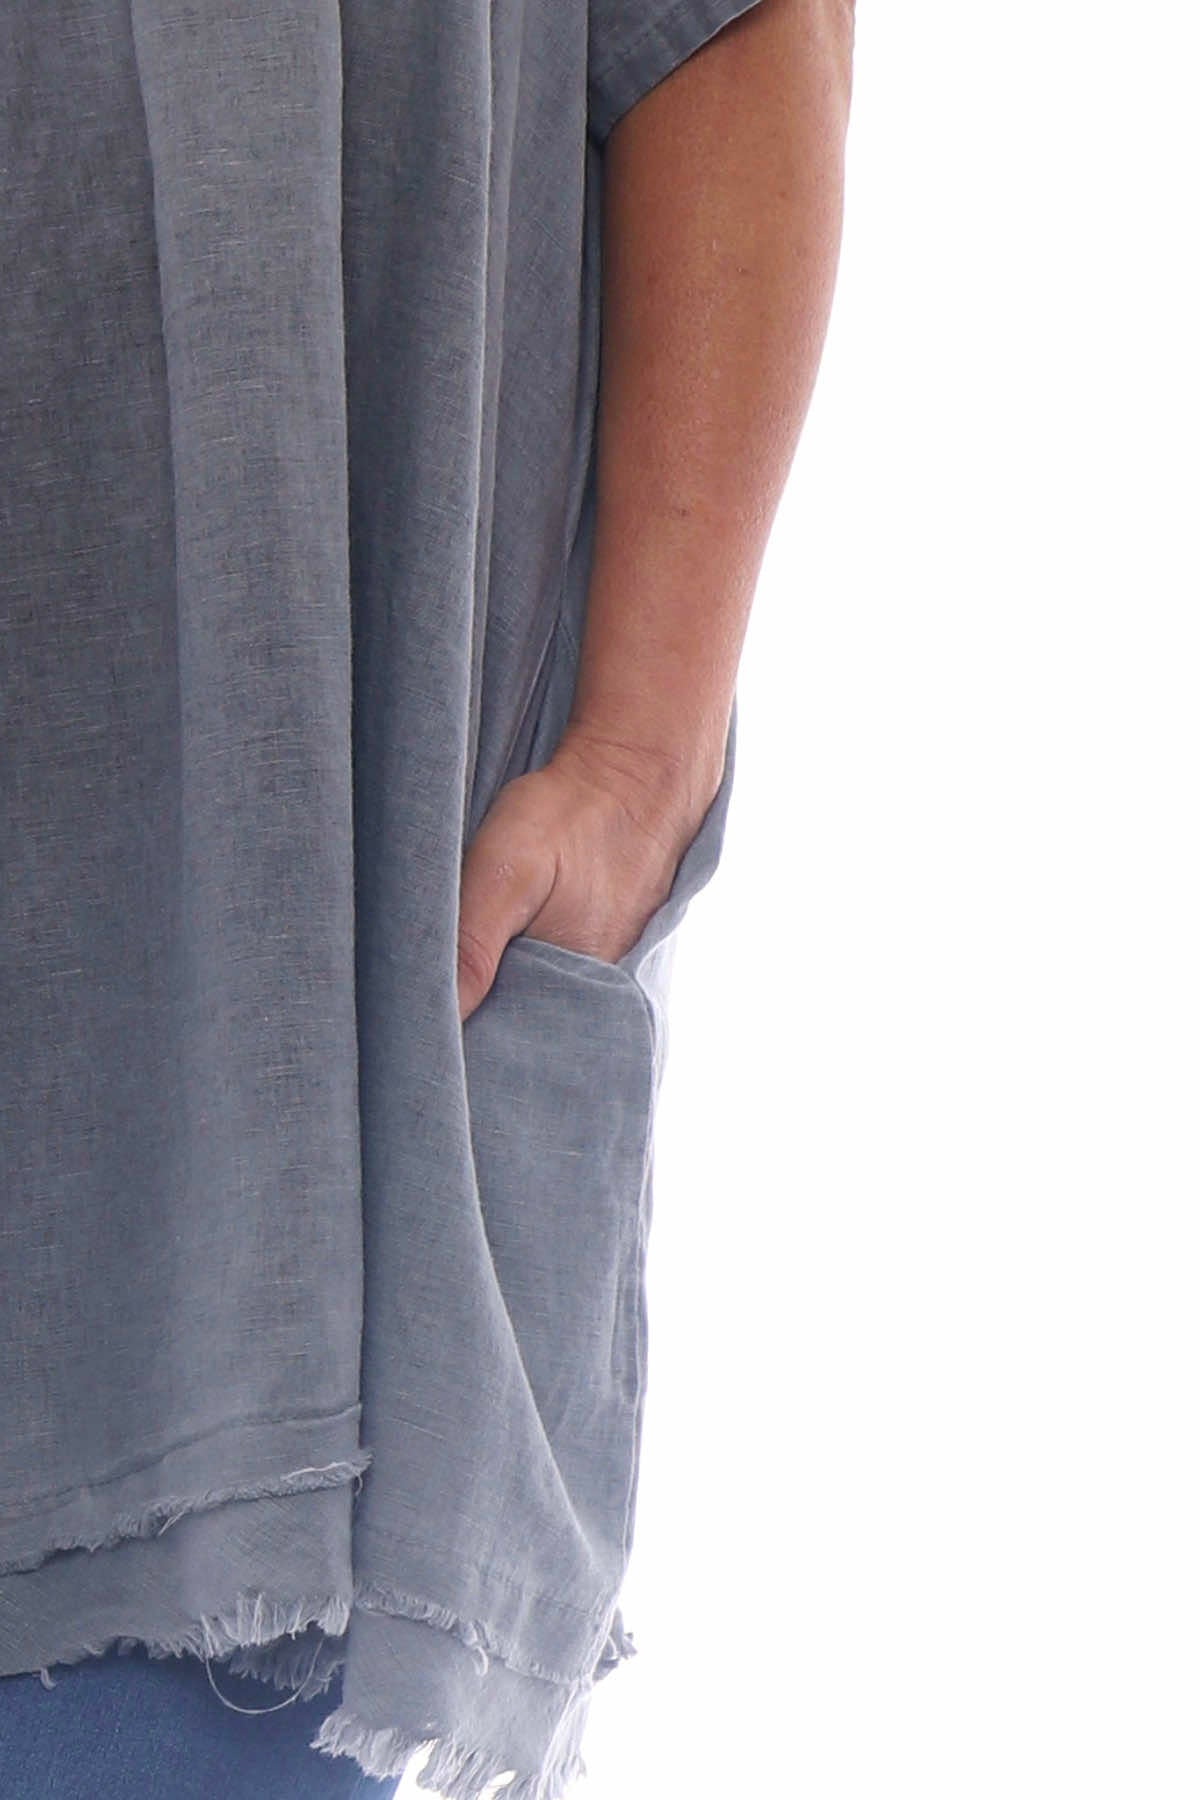 Millia Washed Linen Tunic Mid Grey